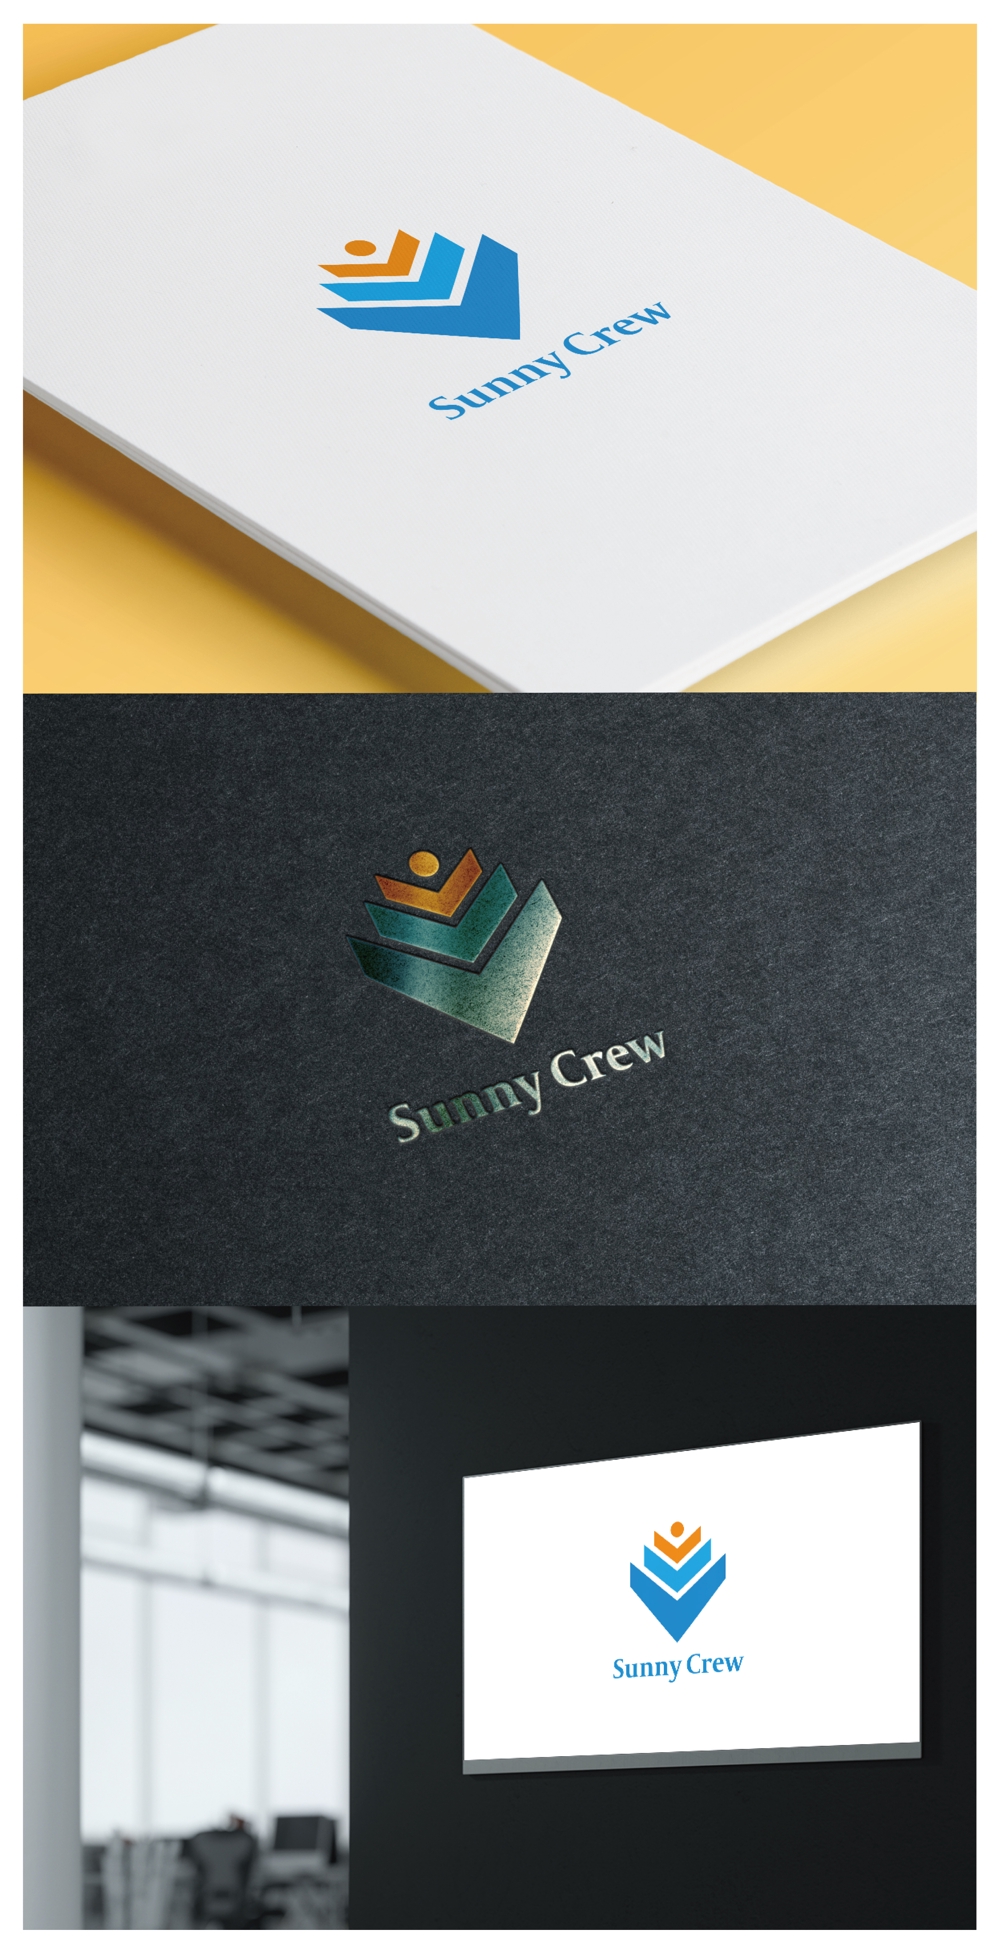 Sunny Crew_logo02_01.jpg